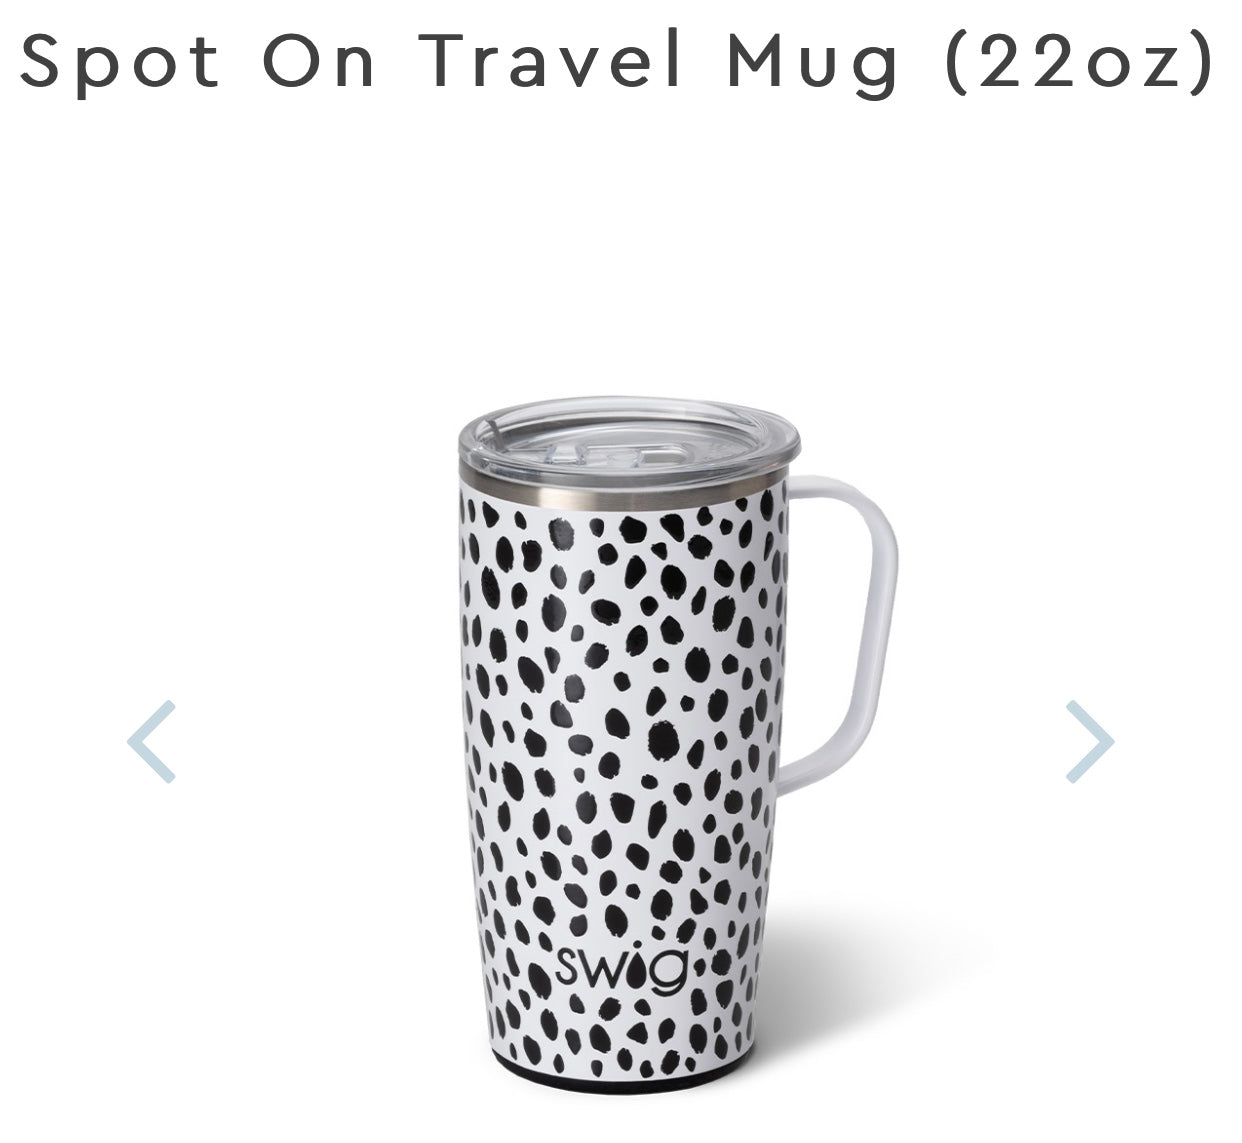 76 Swig travel mug 22oz